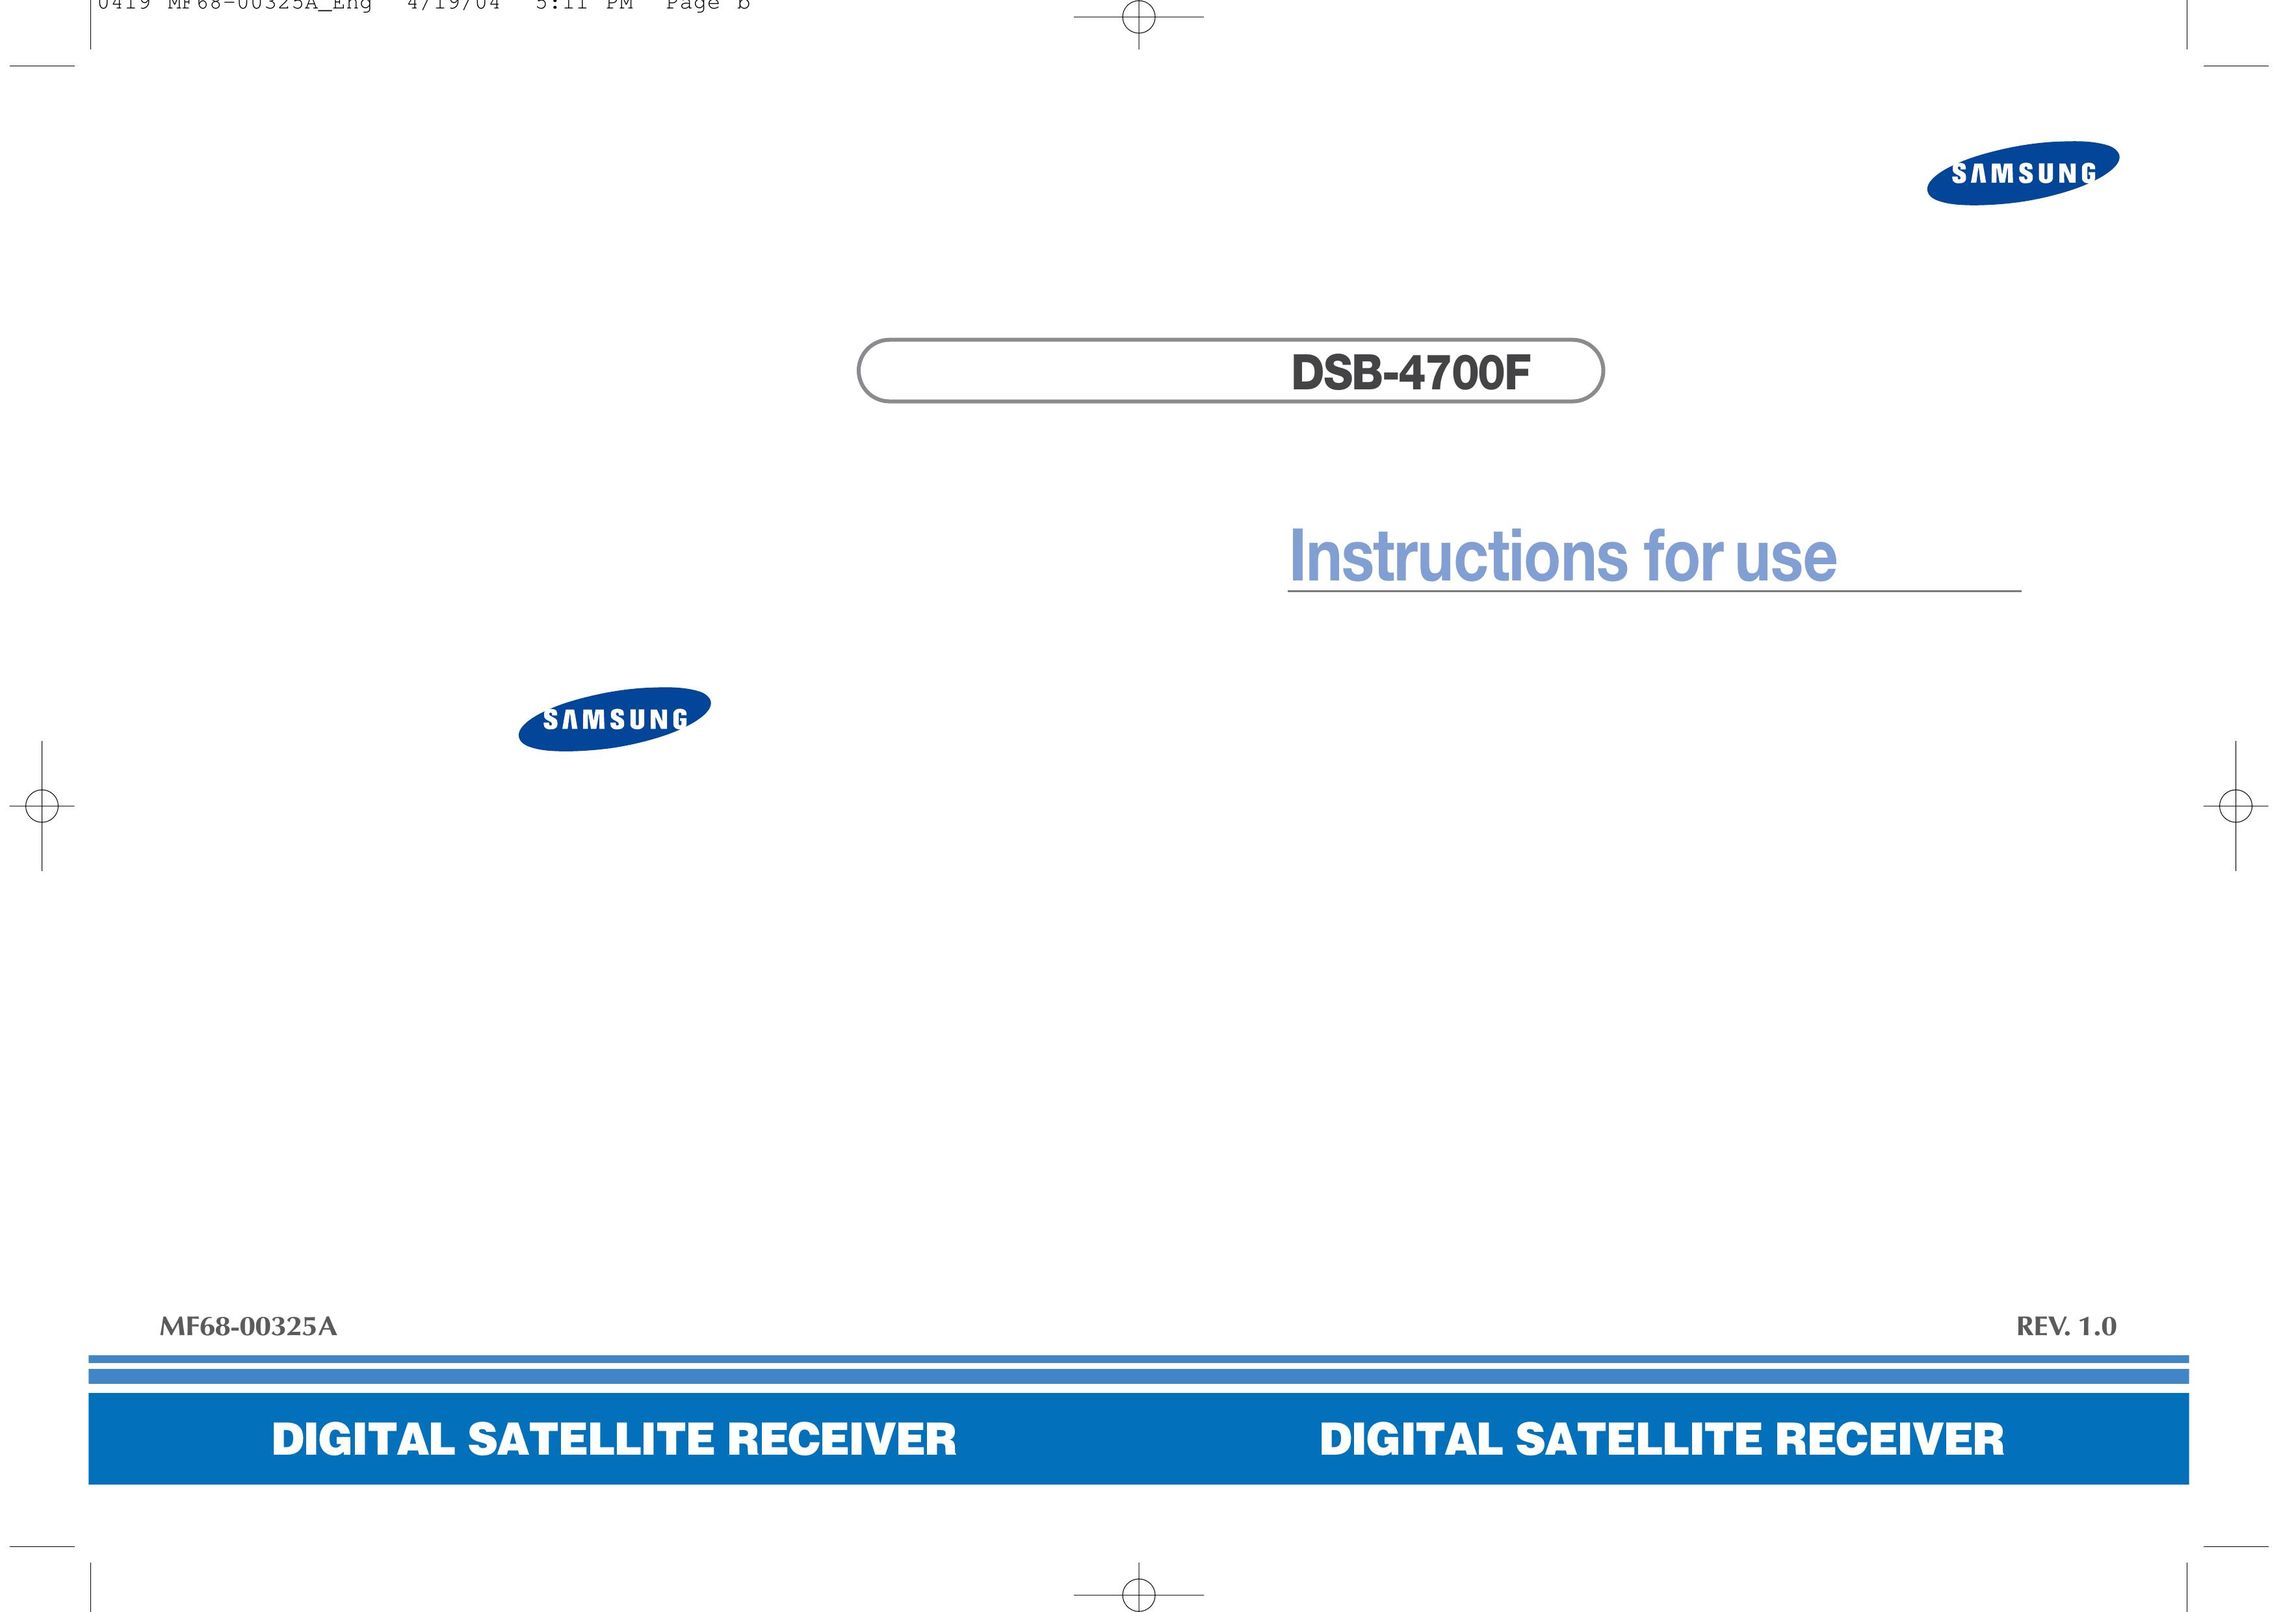 Samsung DSB-4700F Satellite TV System User Manual